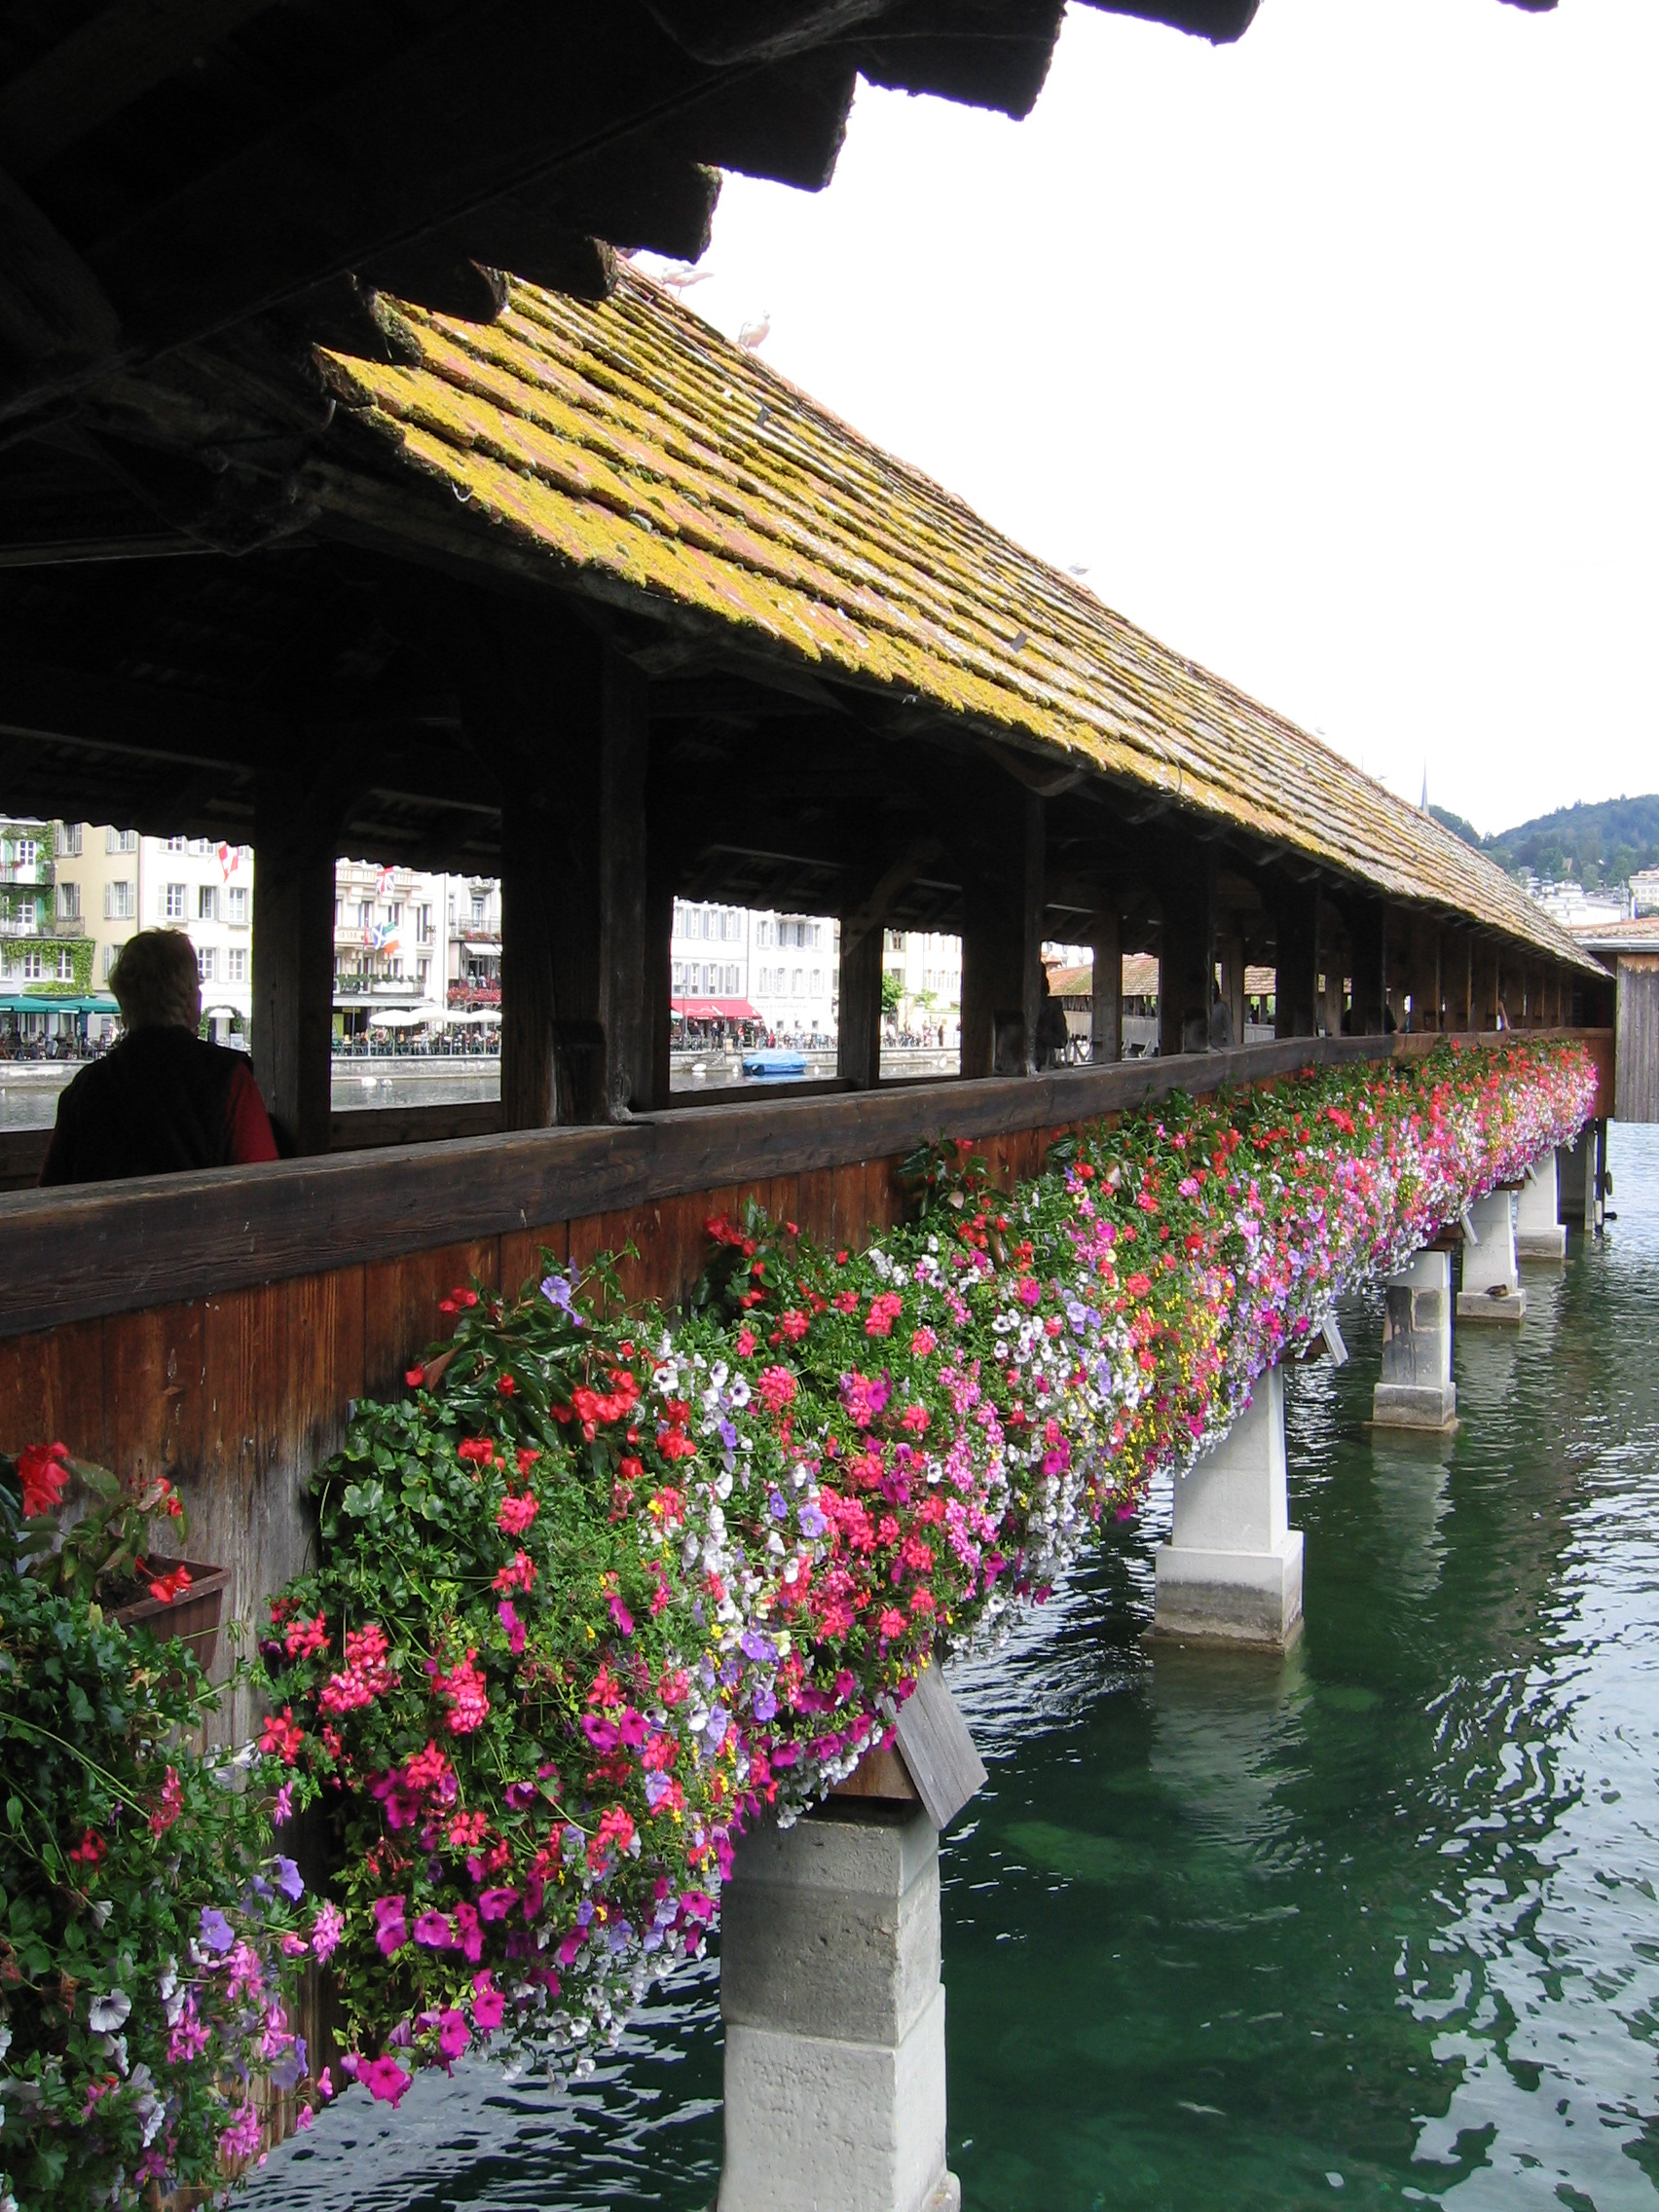 Zájezdy s turistikou - Švýcarsko - Švýcarsko -  Luzern - Kapellbrücke, tzv. Kapličkový most z roku 1333